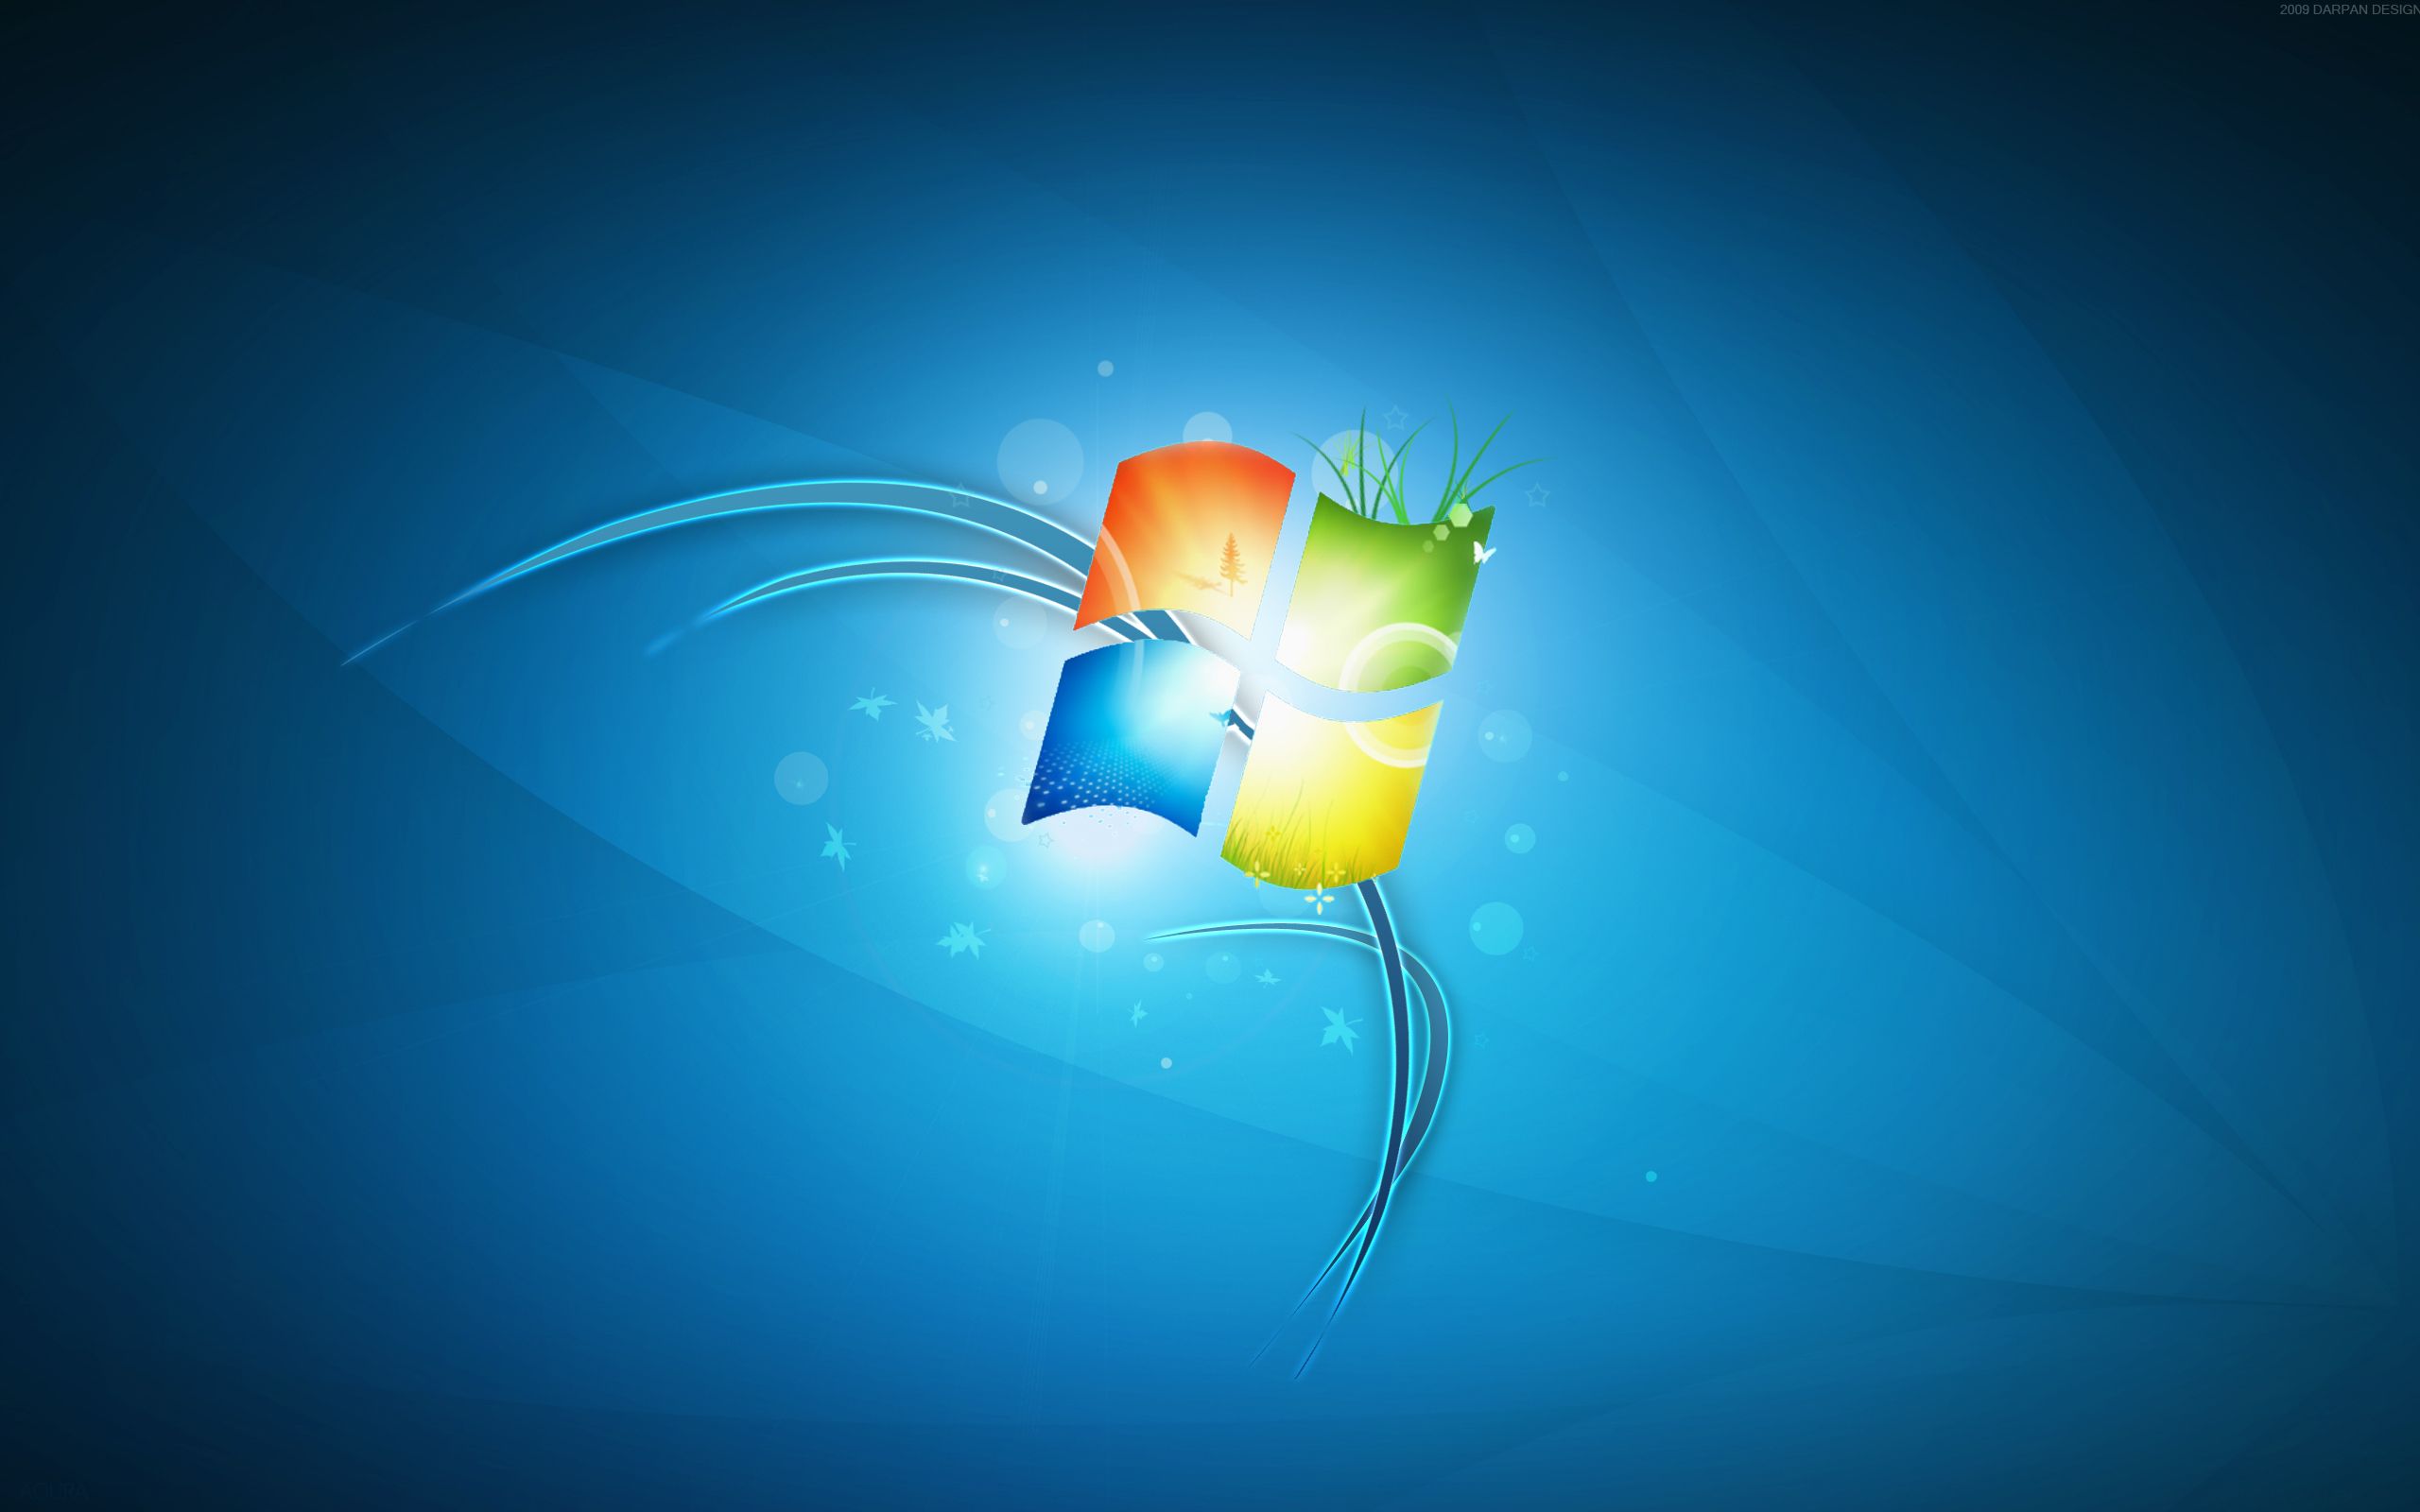 Microsoft Windows 7 Wallpaper | Get Latest Wallpapers